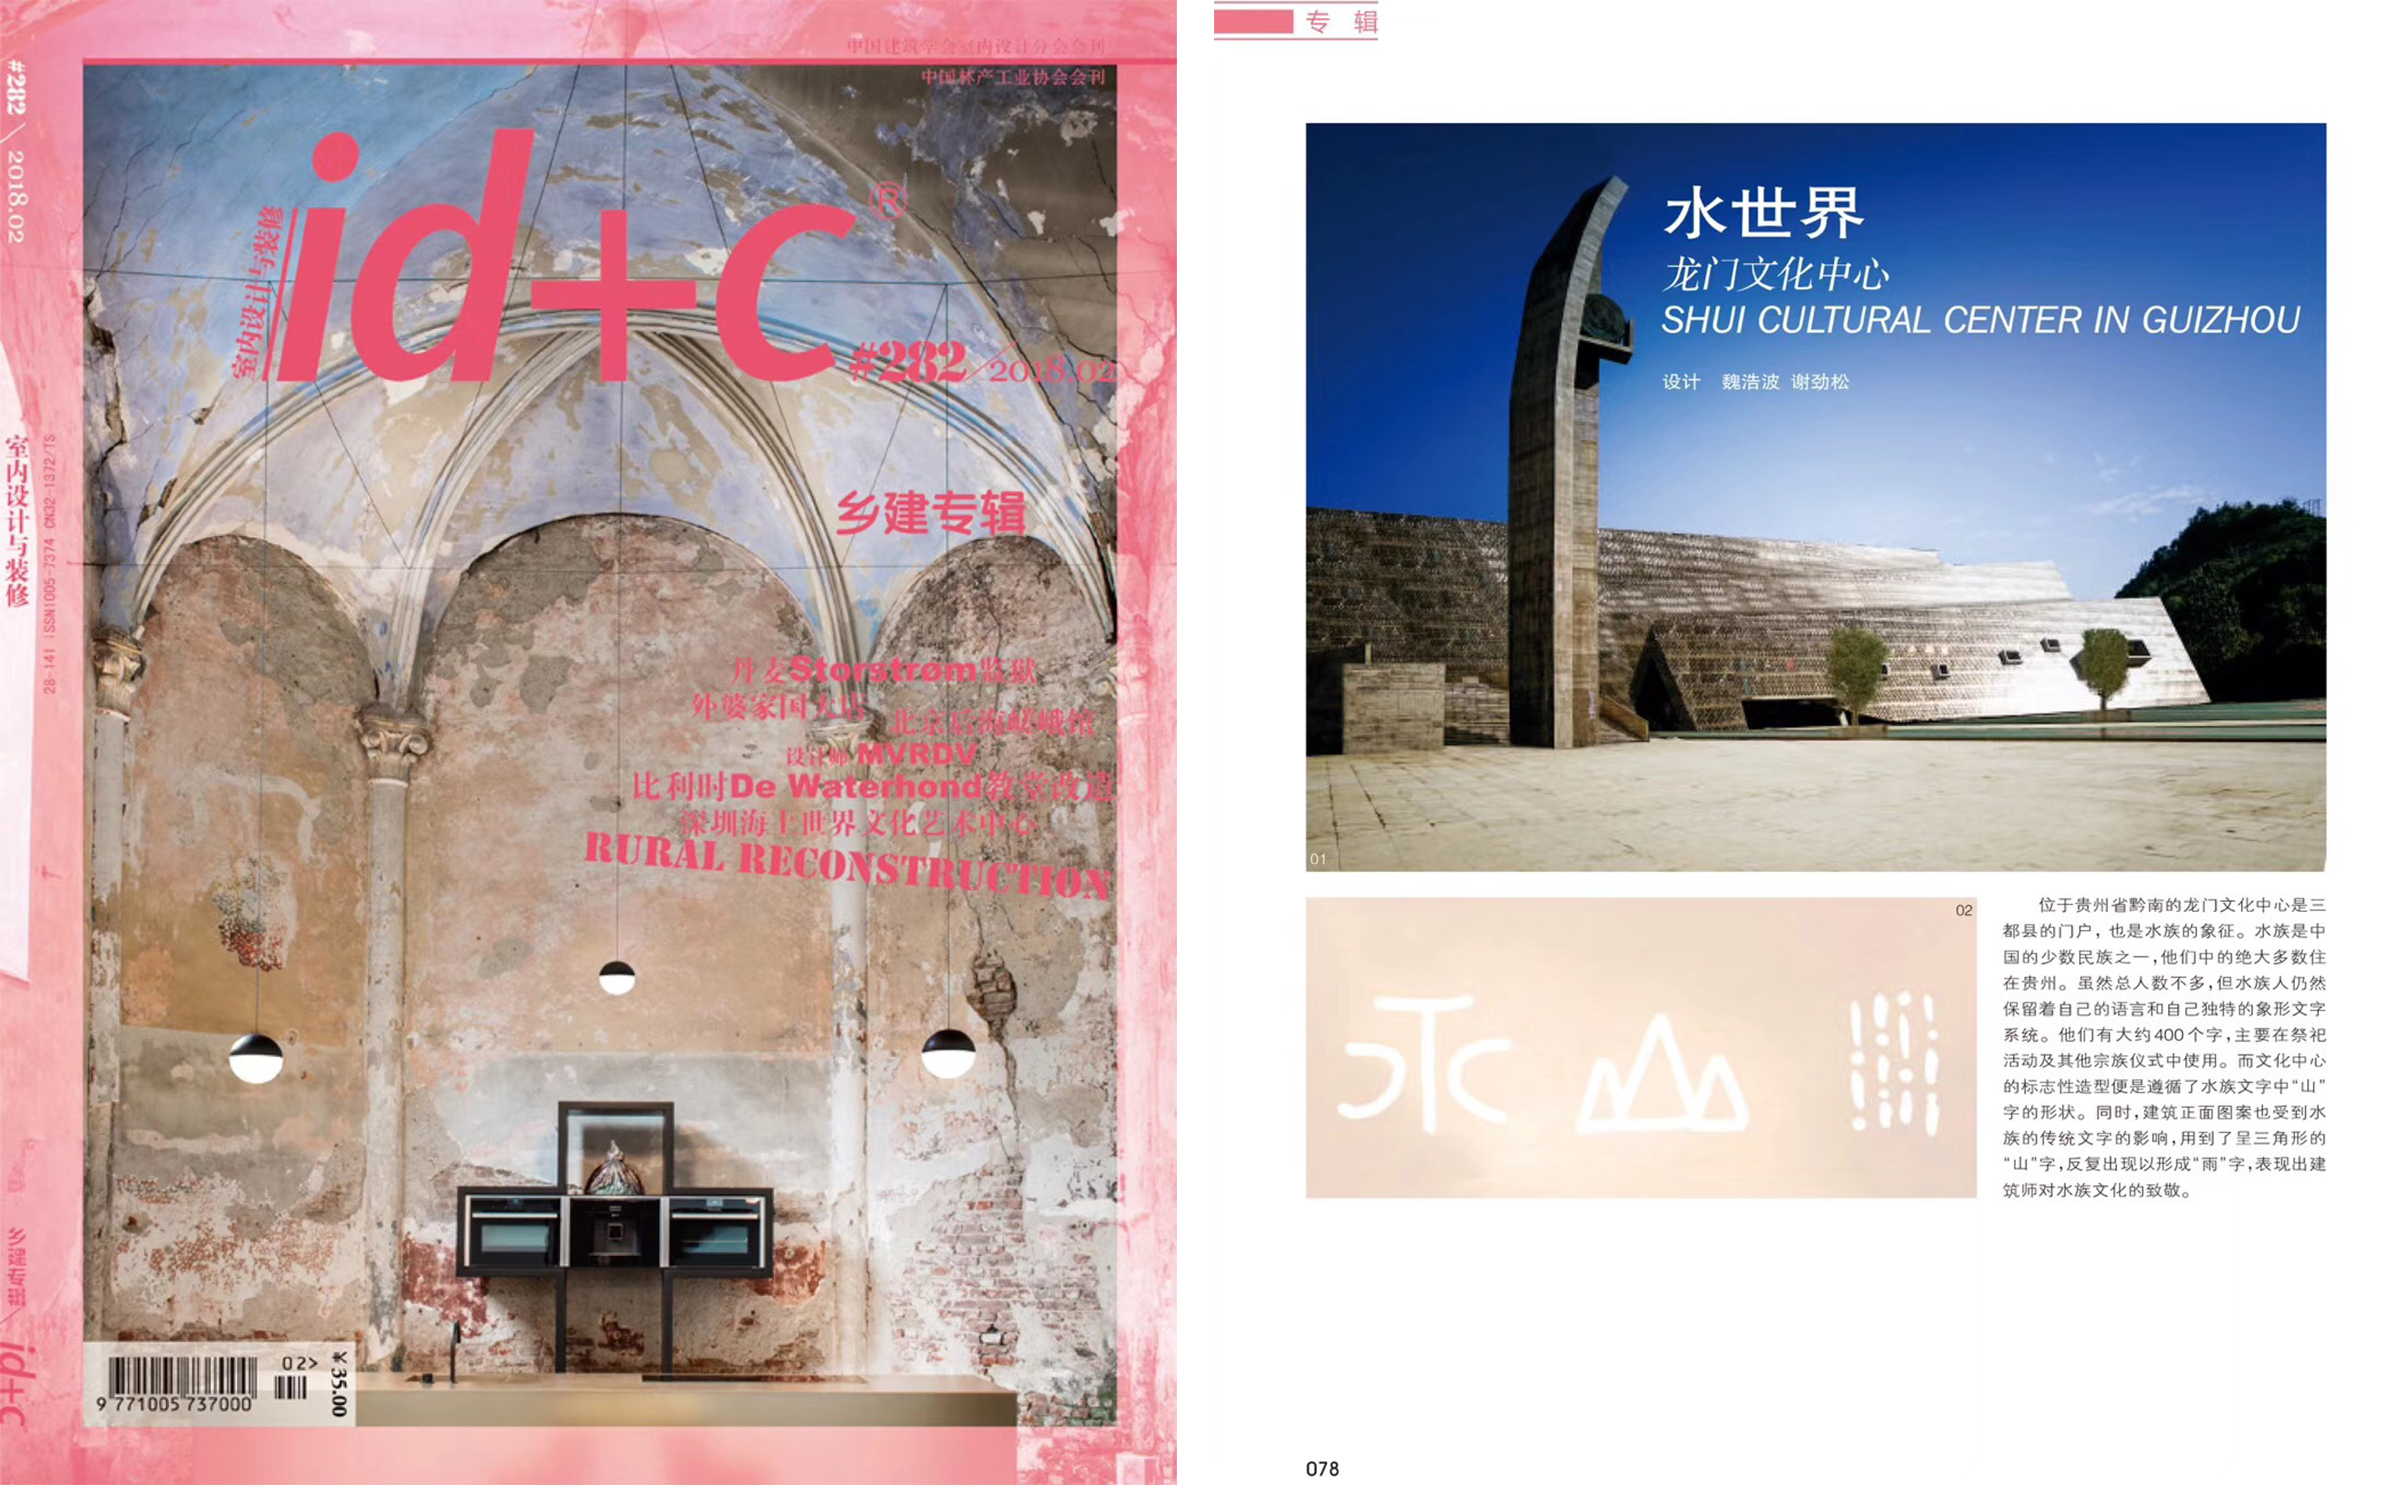 id+c Interior Design and Decoration published "Shui Cultural Center" of West-line Studio 